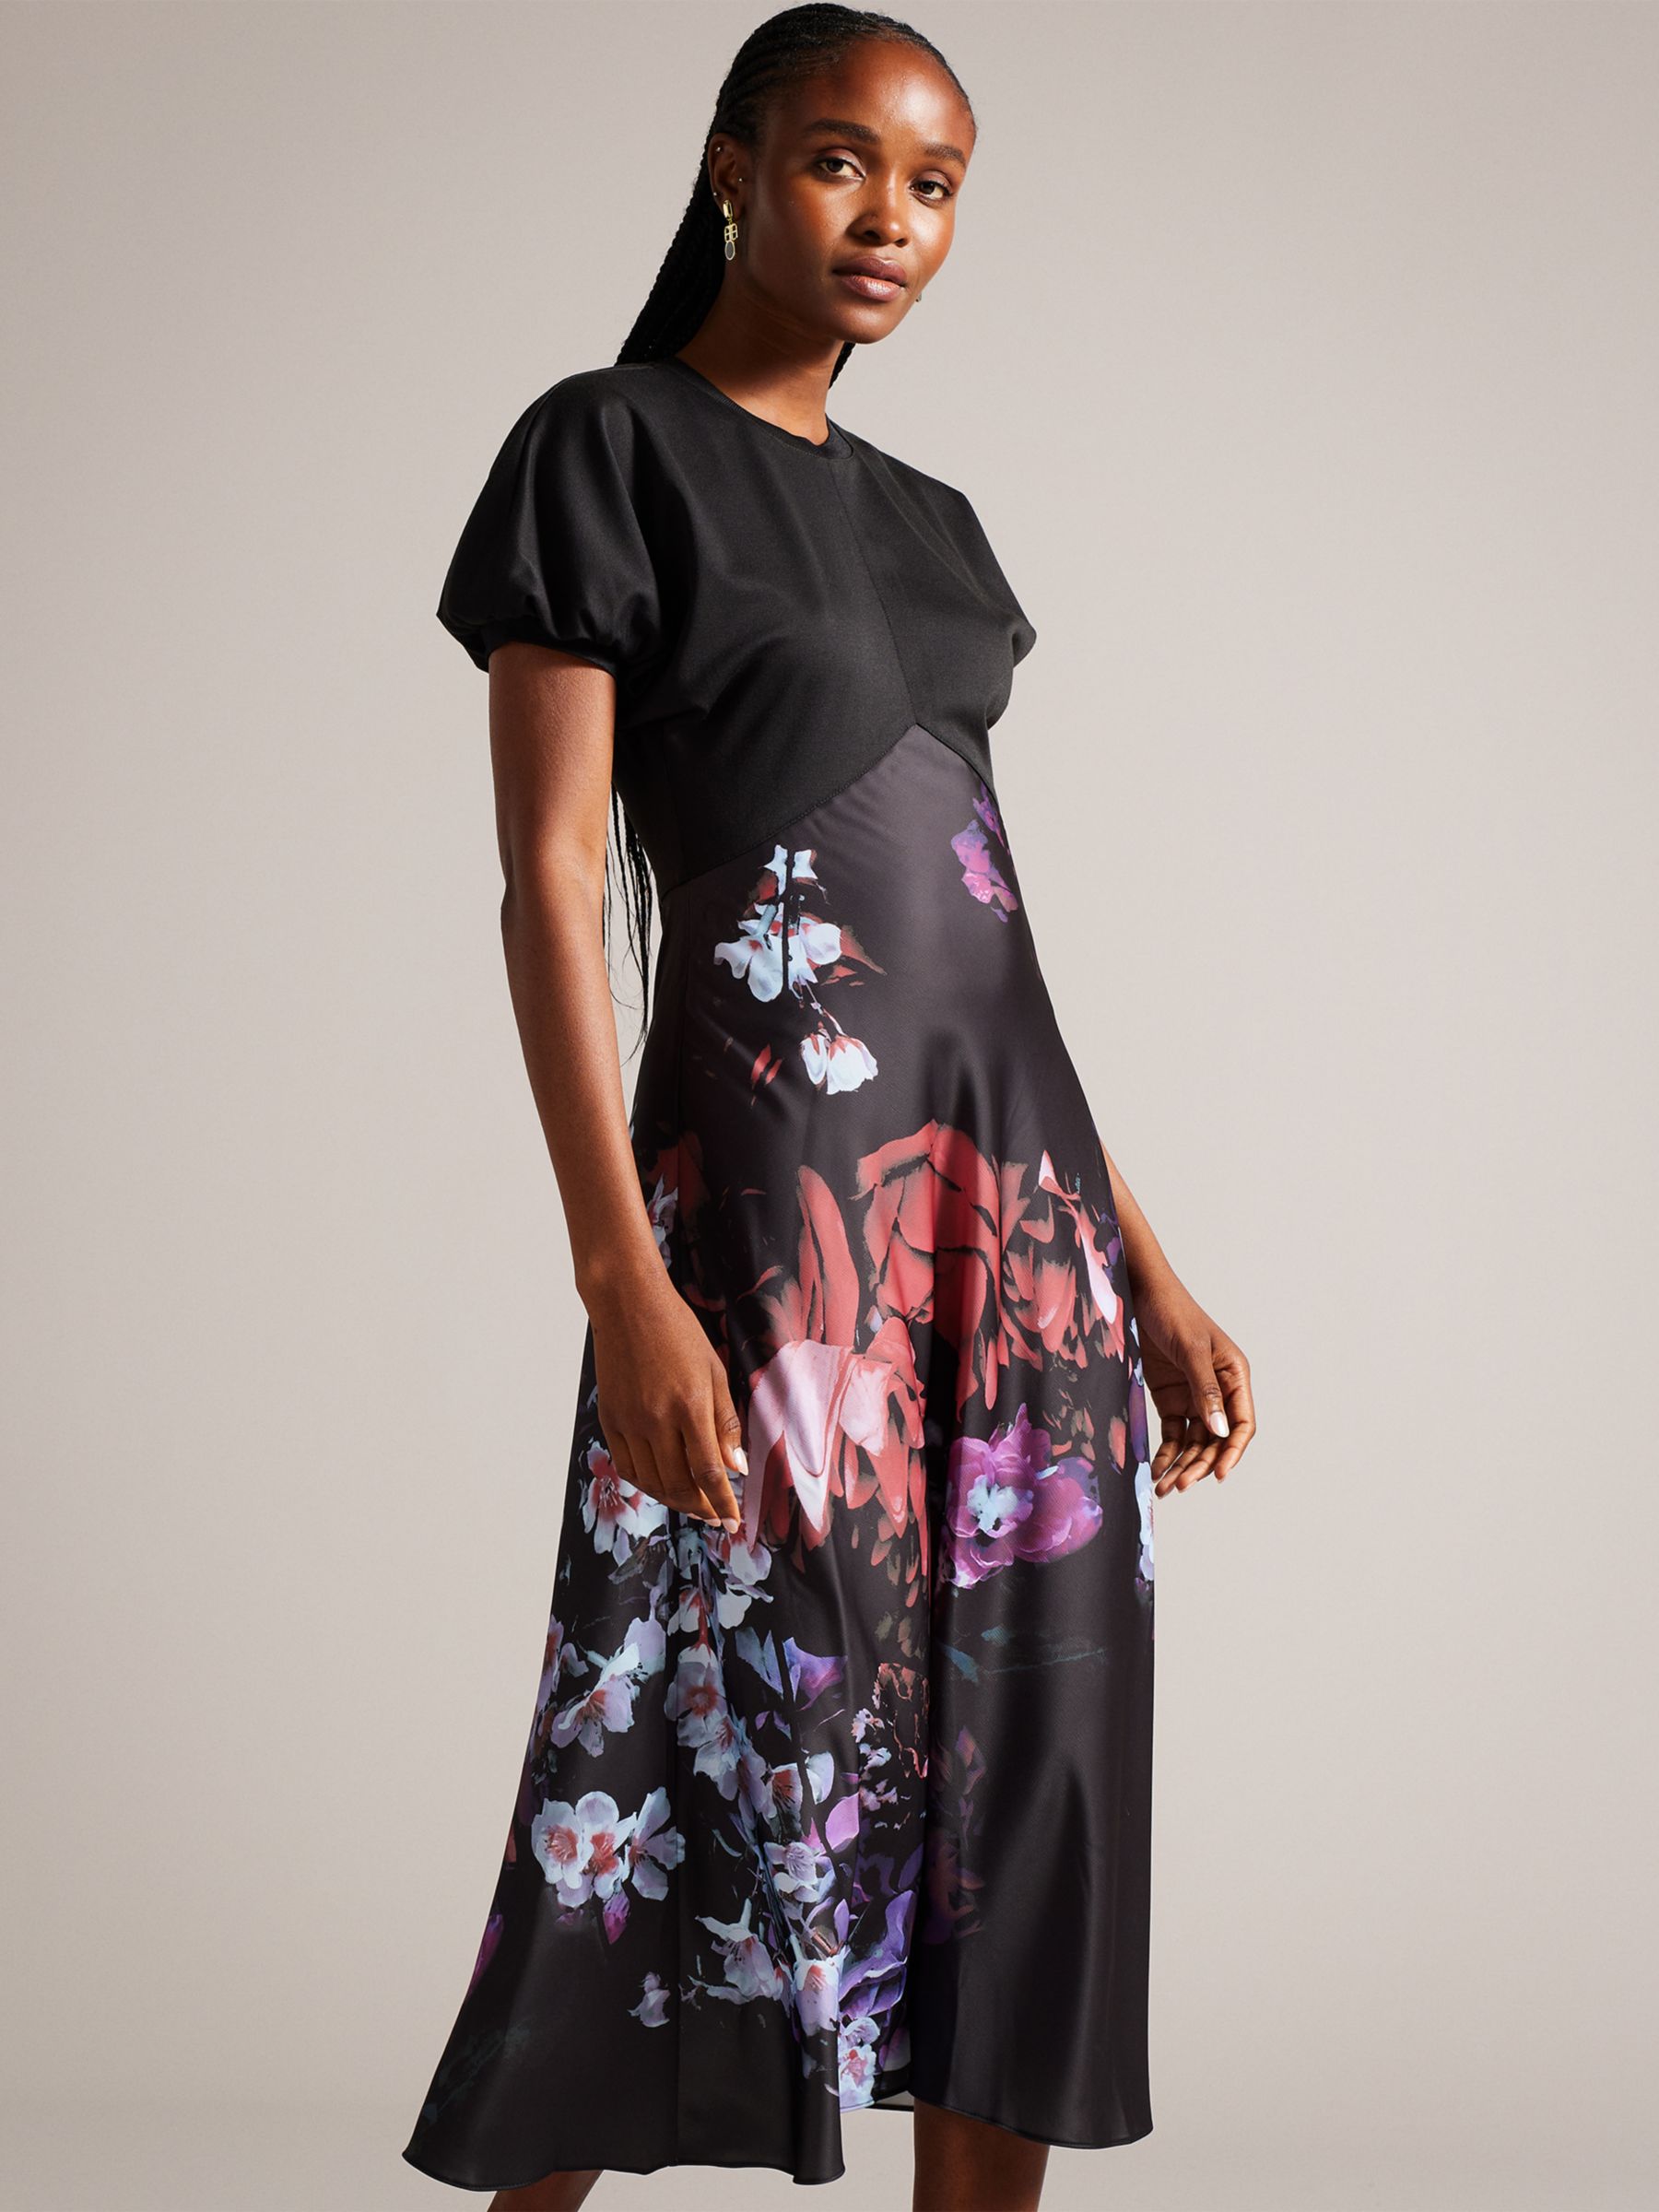 Ted Baker Drewee Ponte Top with Floral Satin Skirt Midi Dress, Black/Multi